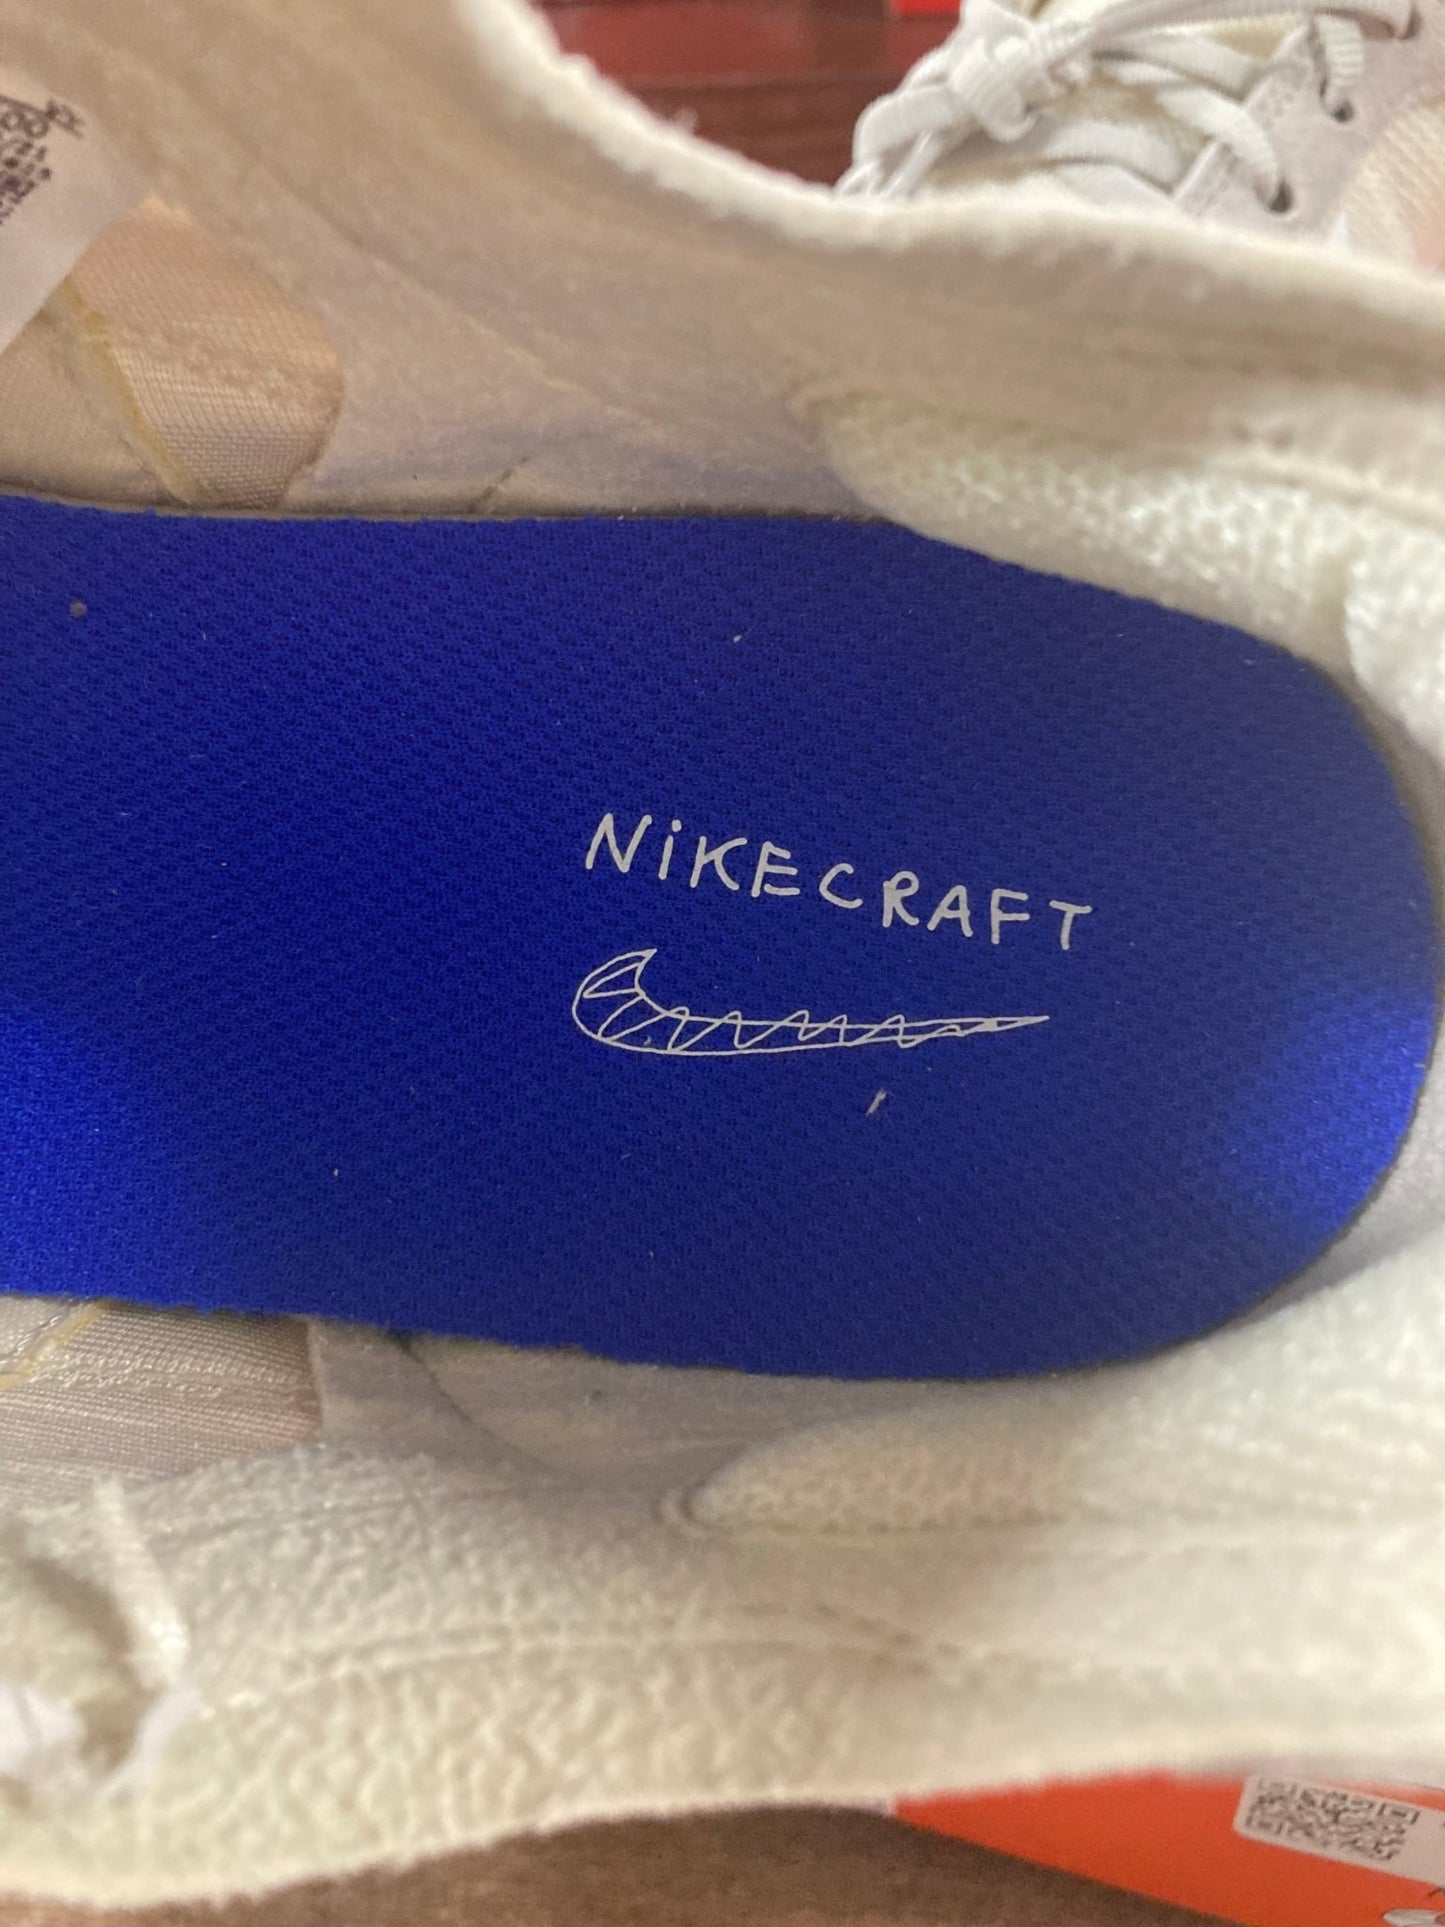 NikeCraft General Purpose Shoe Tom Sachs (W) - Supra Sneakers